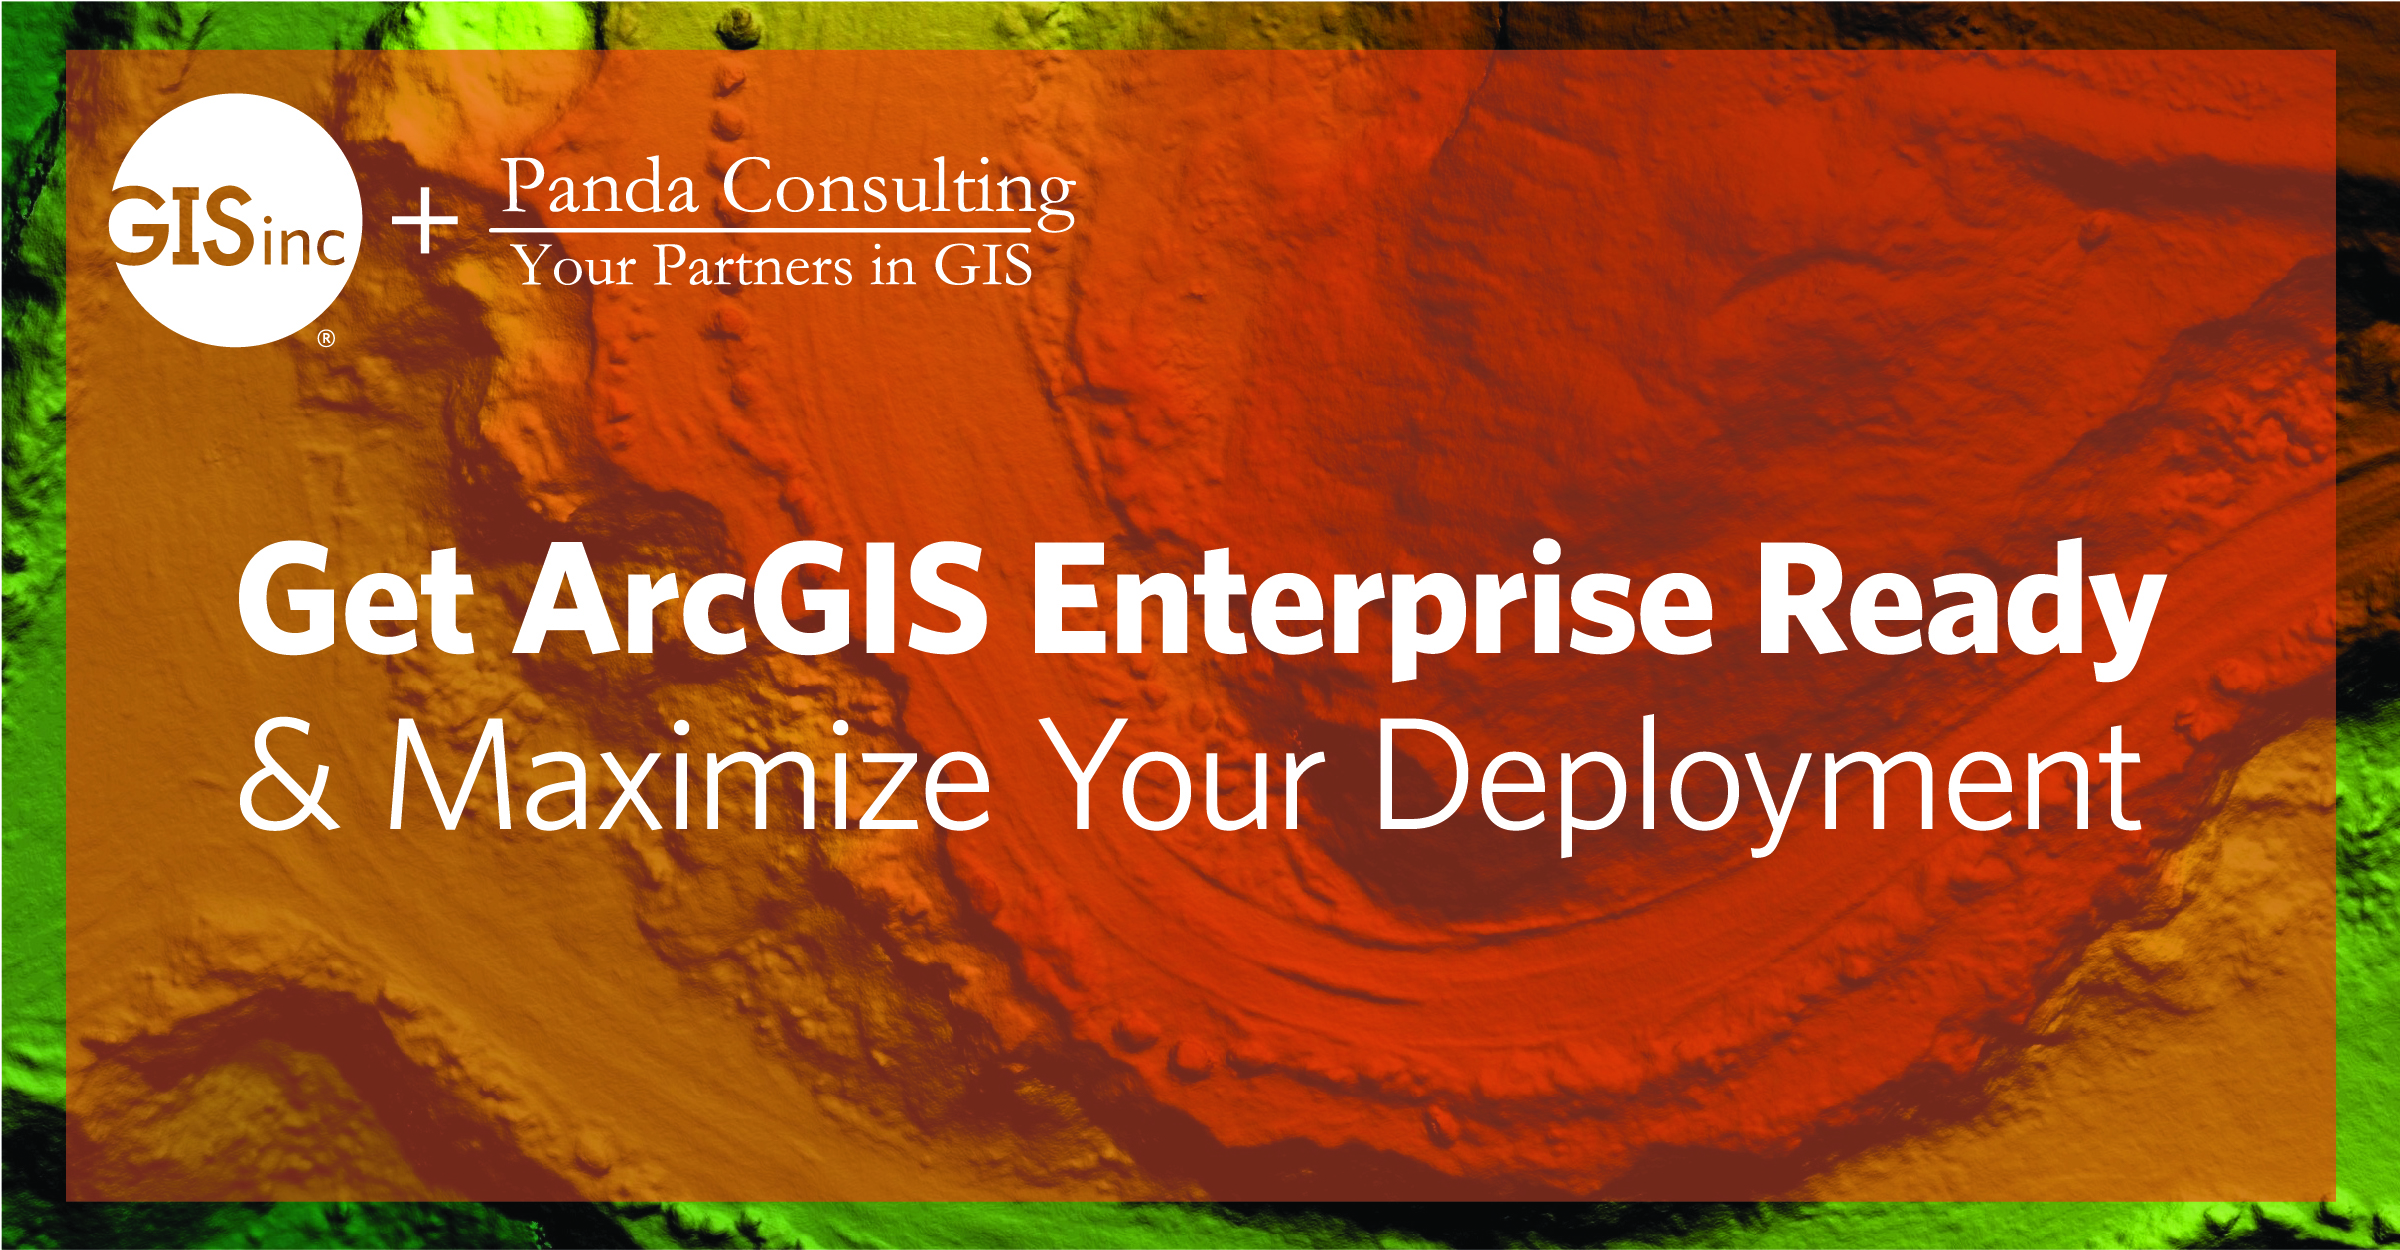 Webinar Q&A: Get ArcGIS Enterprise Ready